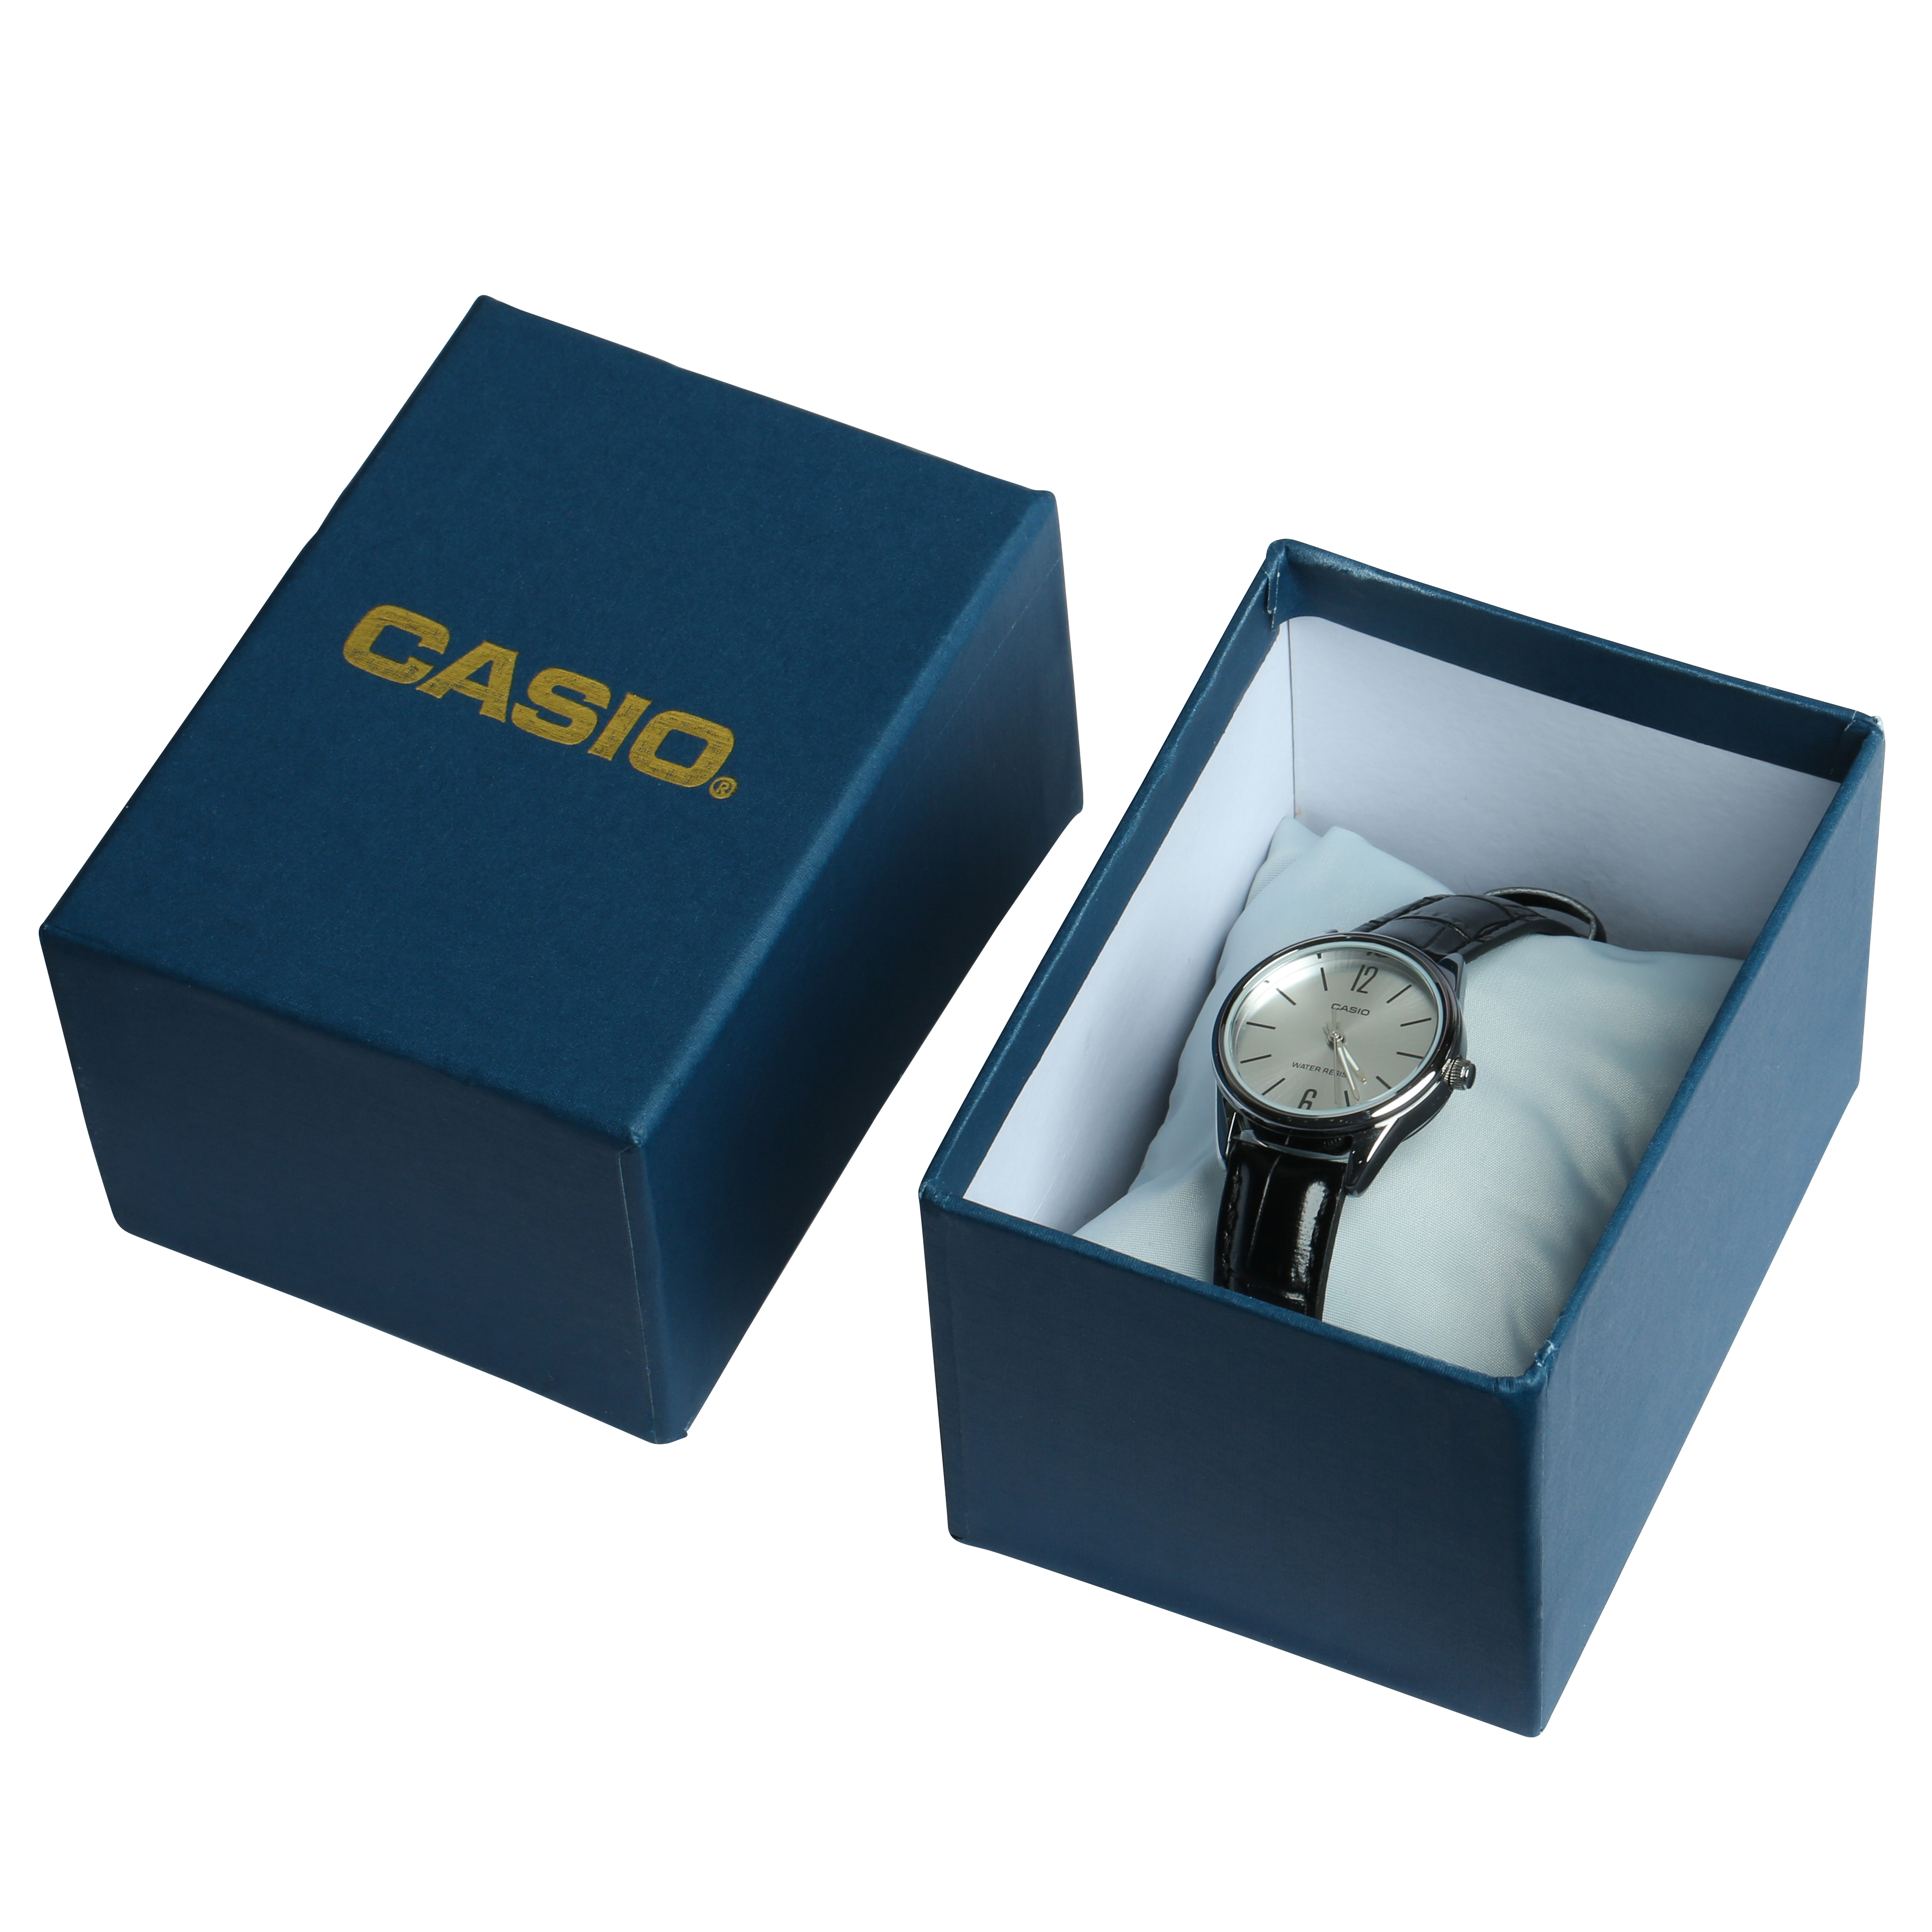 Đồng hồ Nữ Casio LTP-V005L-7BUDF